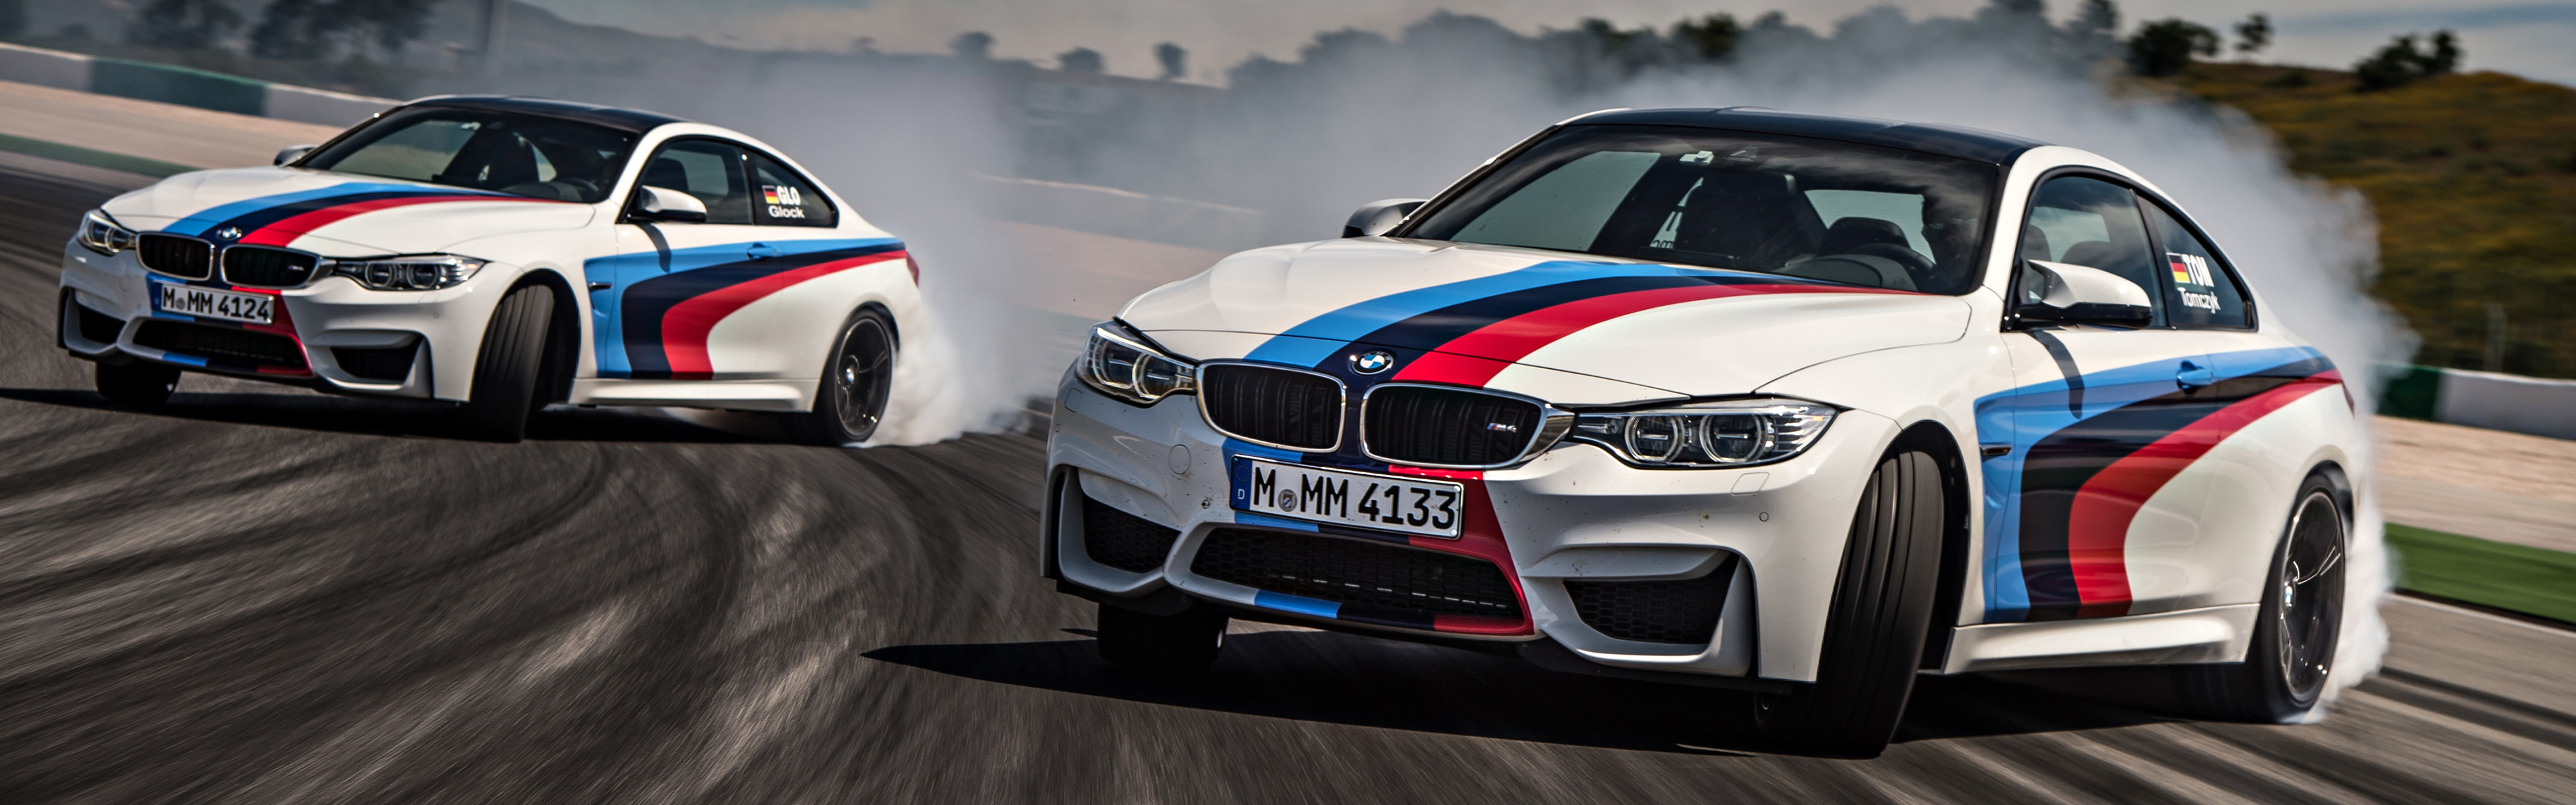 BMW M4, Race Tracks, Drifting, Car, Vehicle, Motion Blur, Smoke, Dual Monitors, Multiple Display Wallpaper